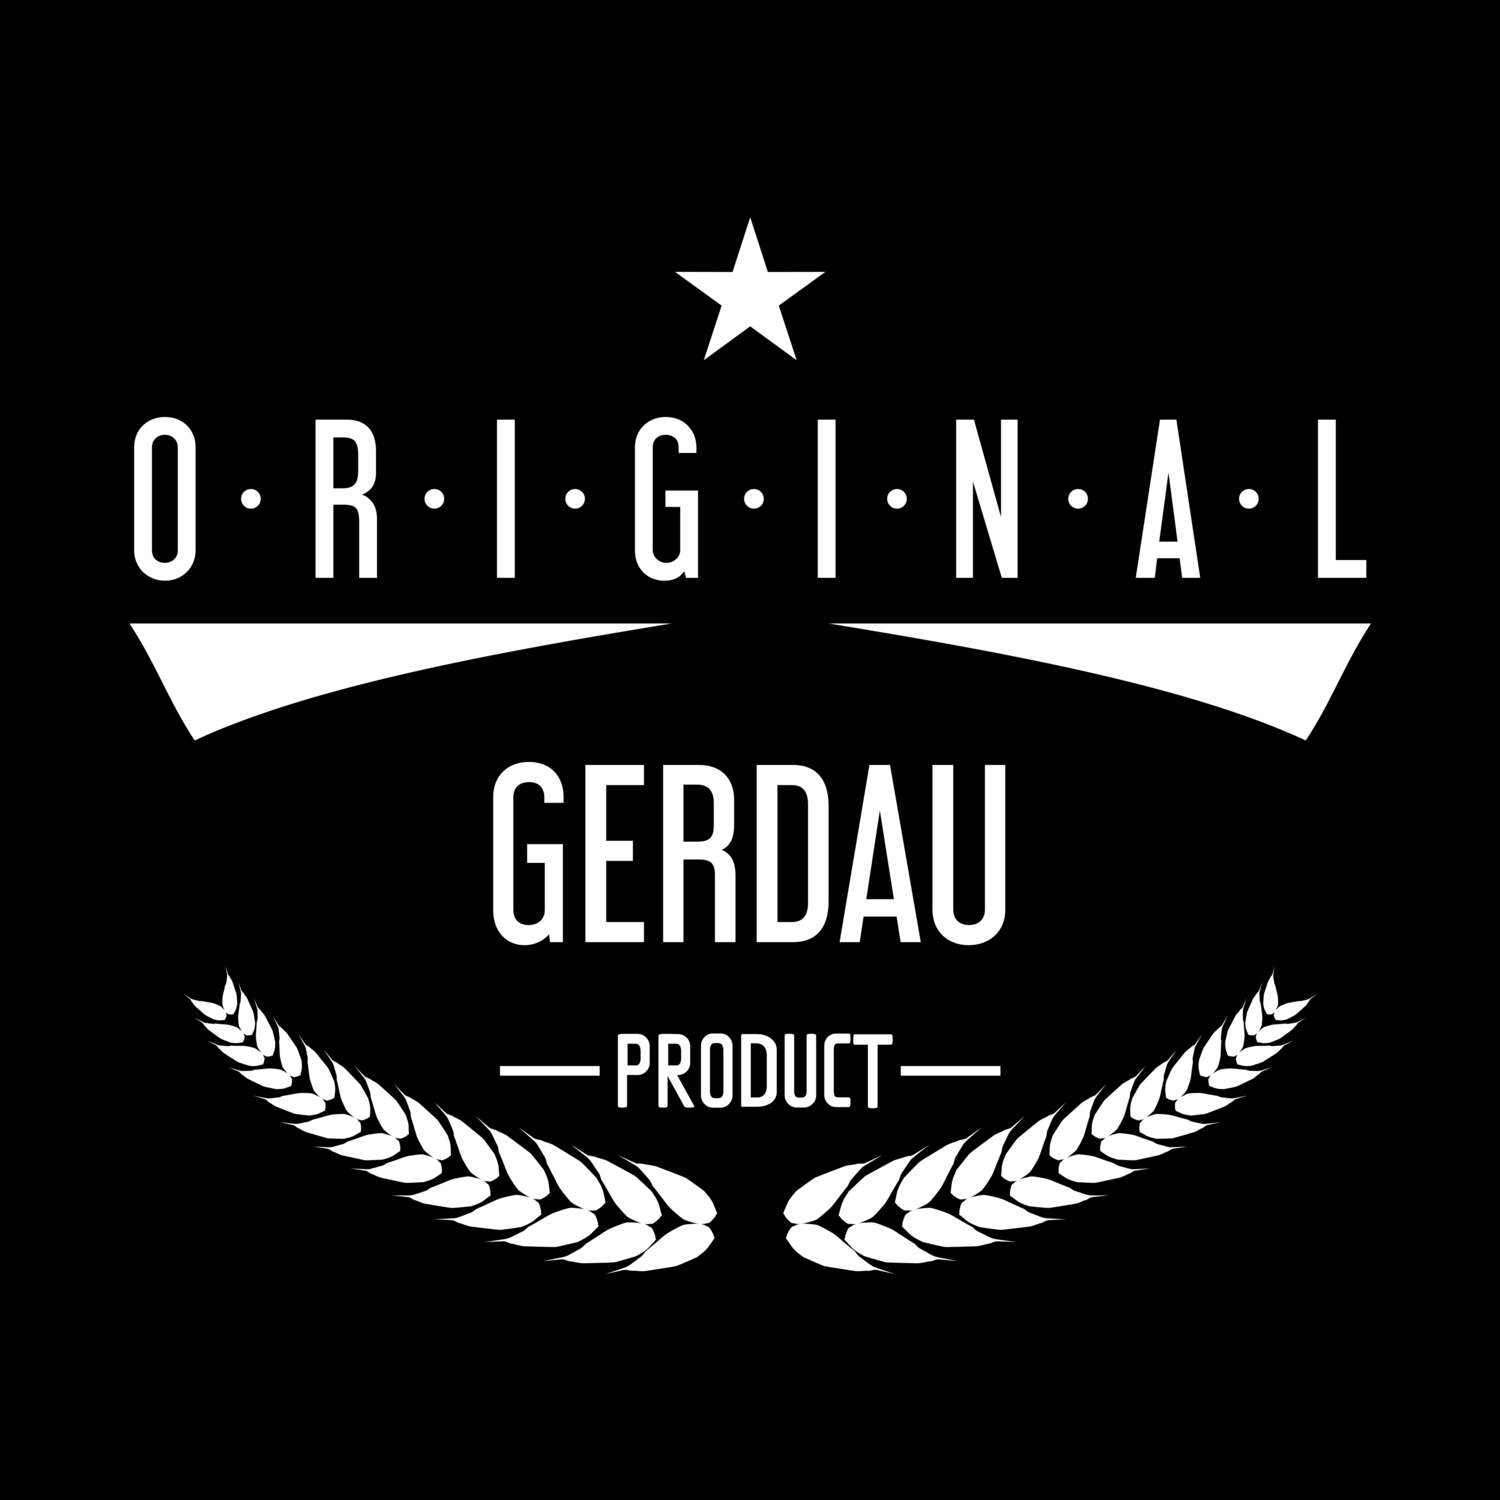 Gerdau T-Shirt »Original Product«